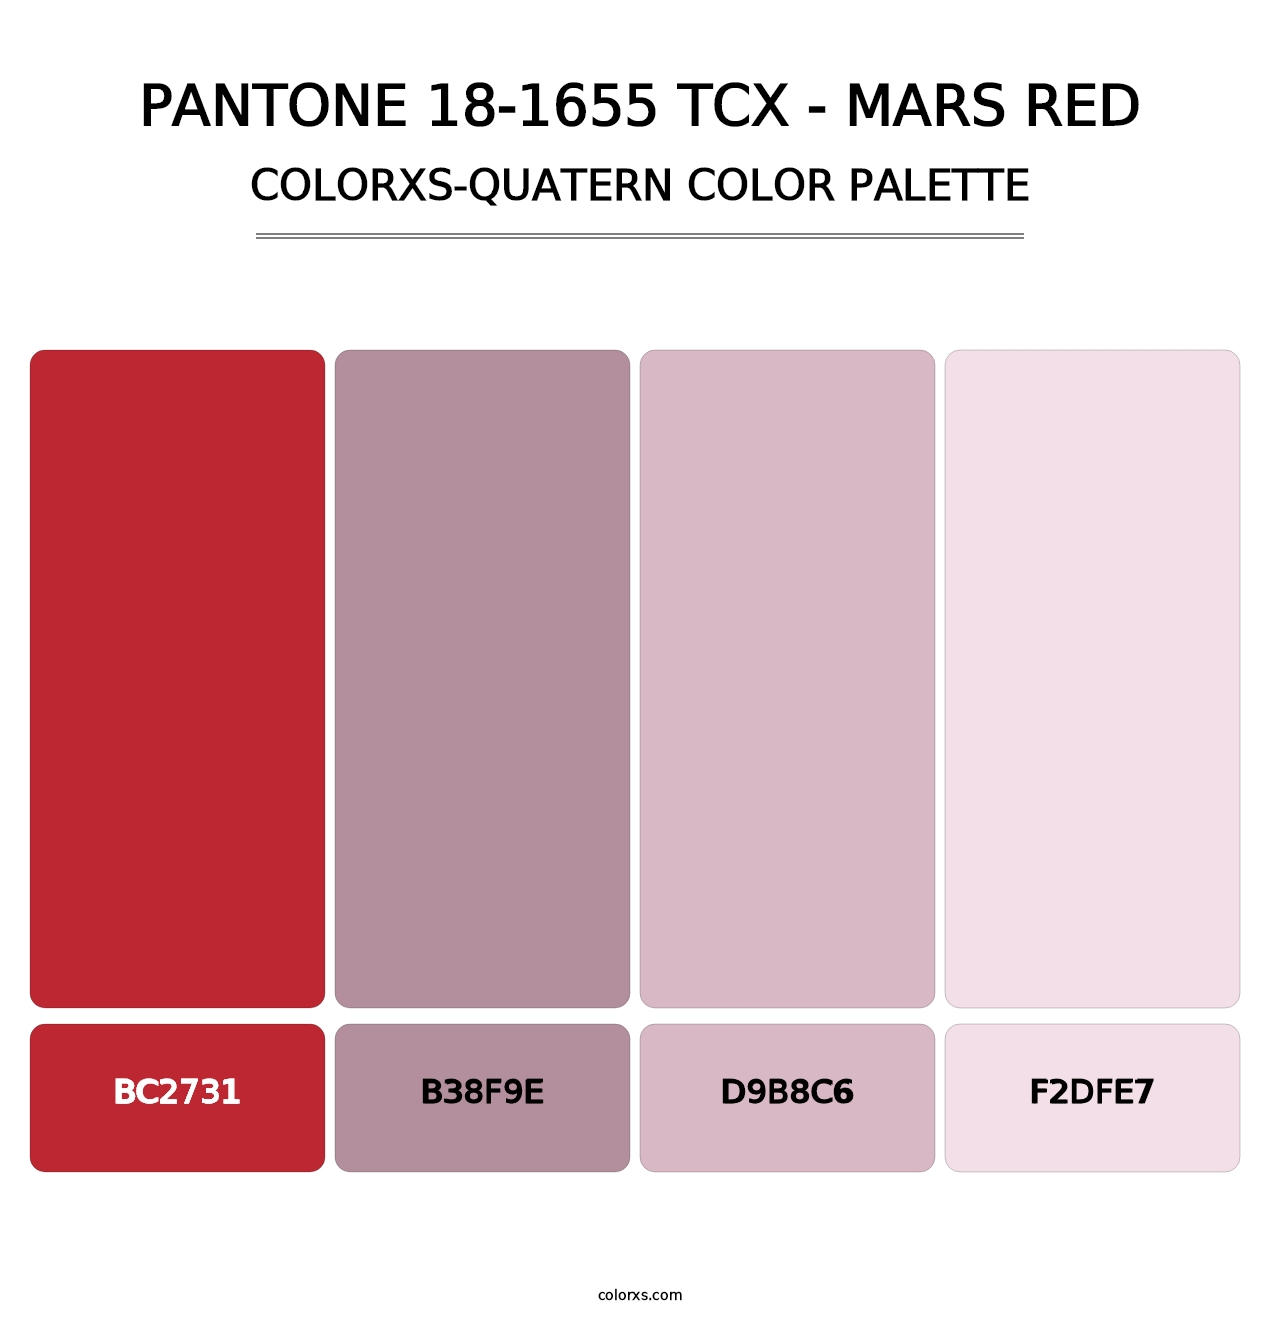 PANTONE 18-1655 TCX - Mars Red - Colorxs Quatern Palette